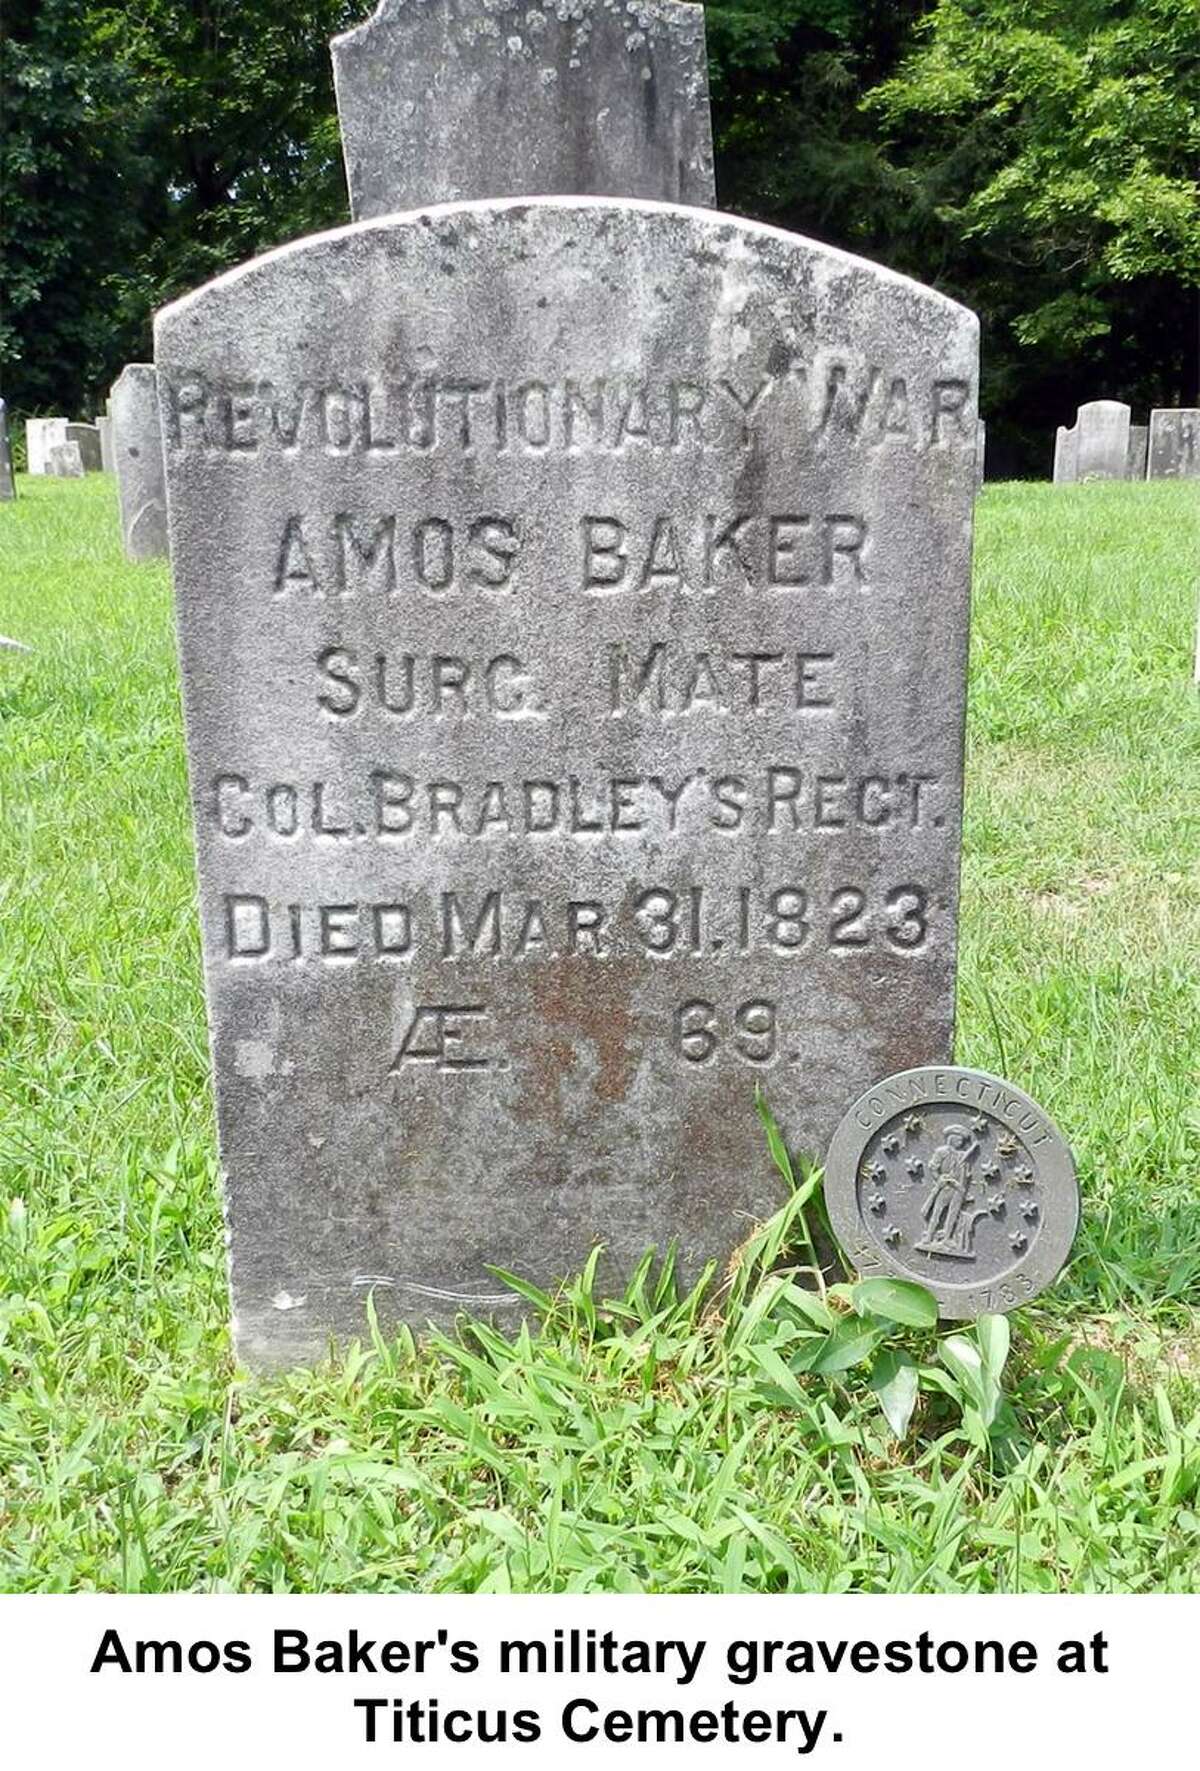 Amos Baker's gravesite in Ridgefield.